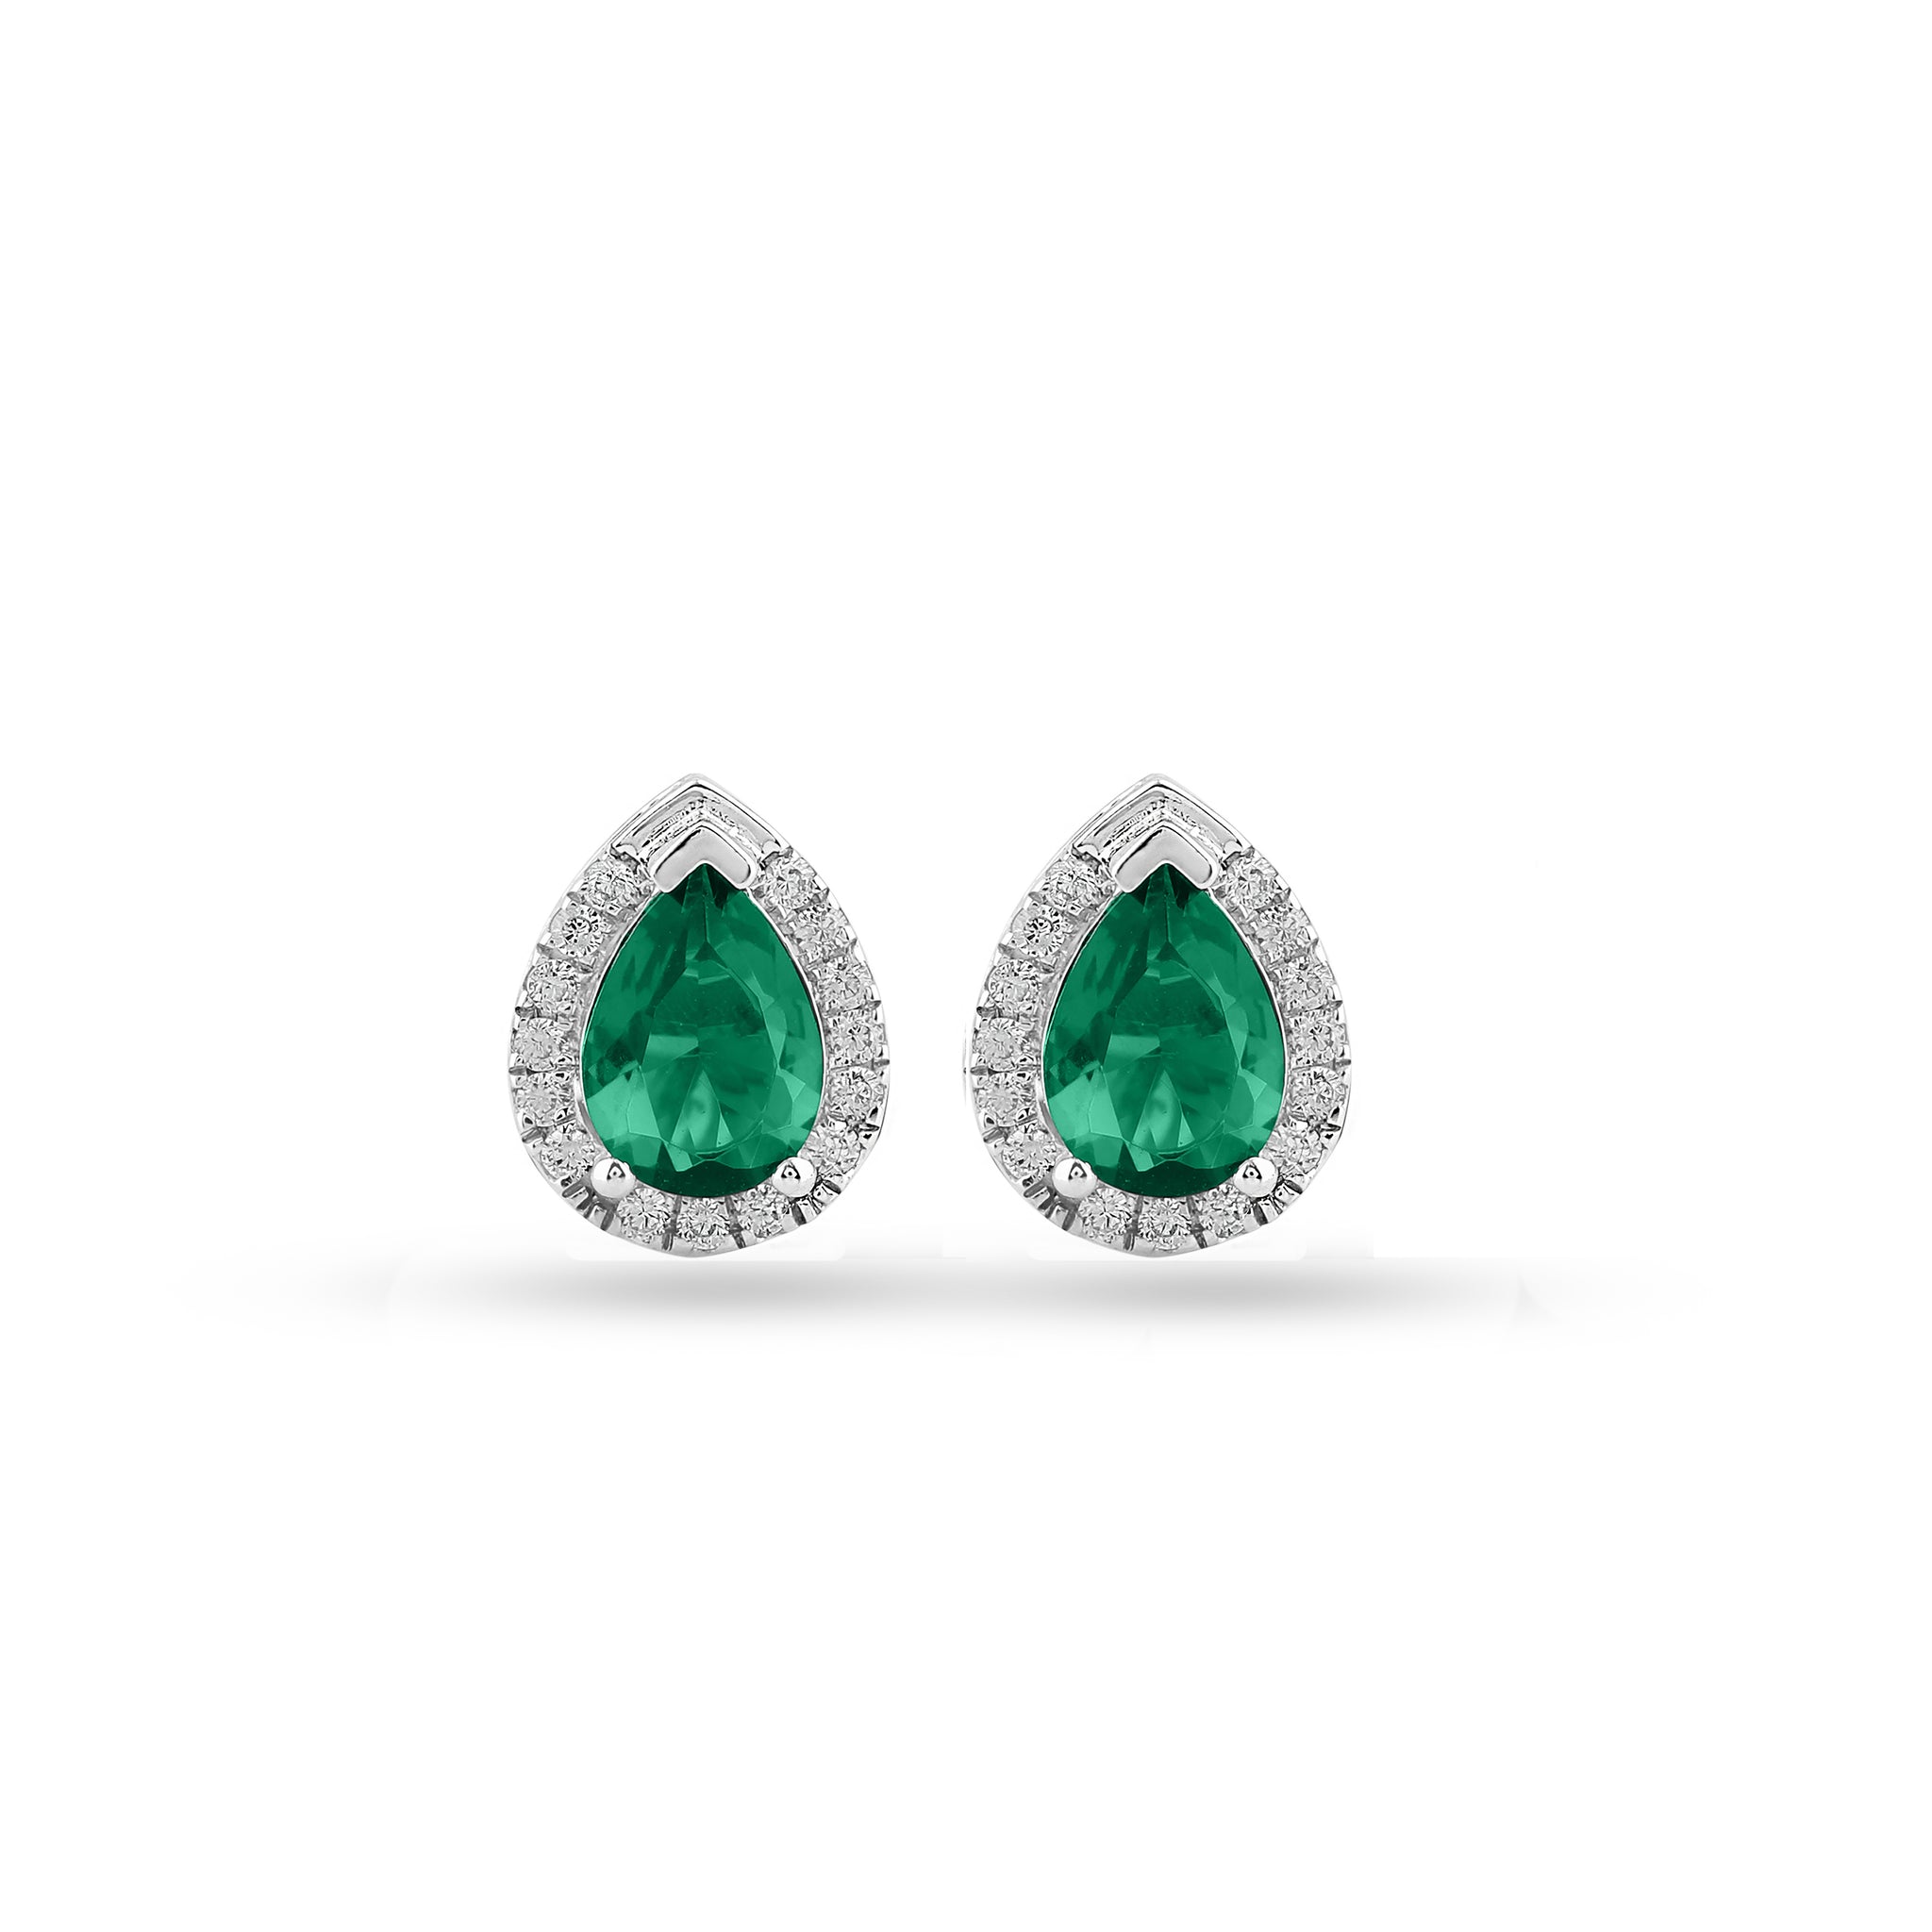 Pear cut emerald gemstone halo earrings